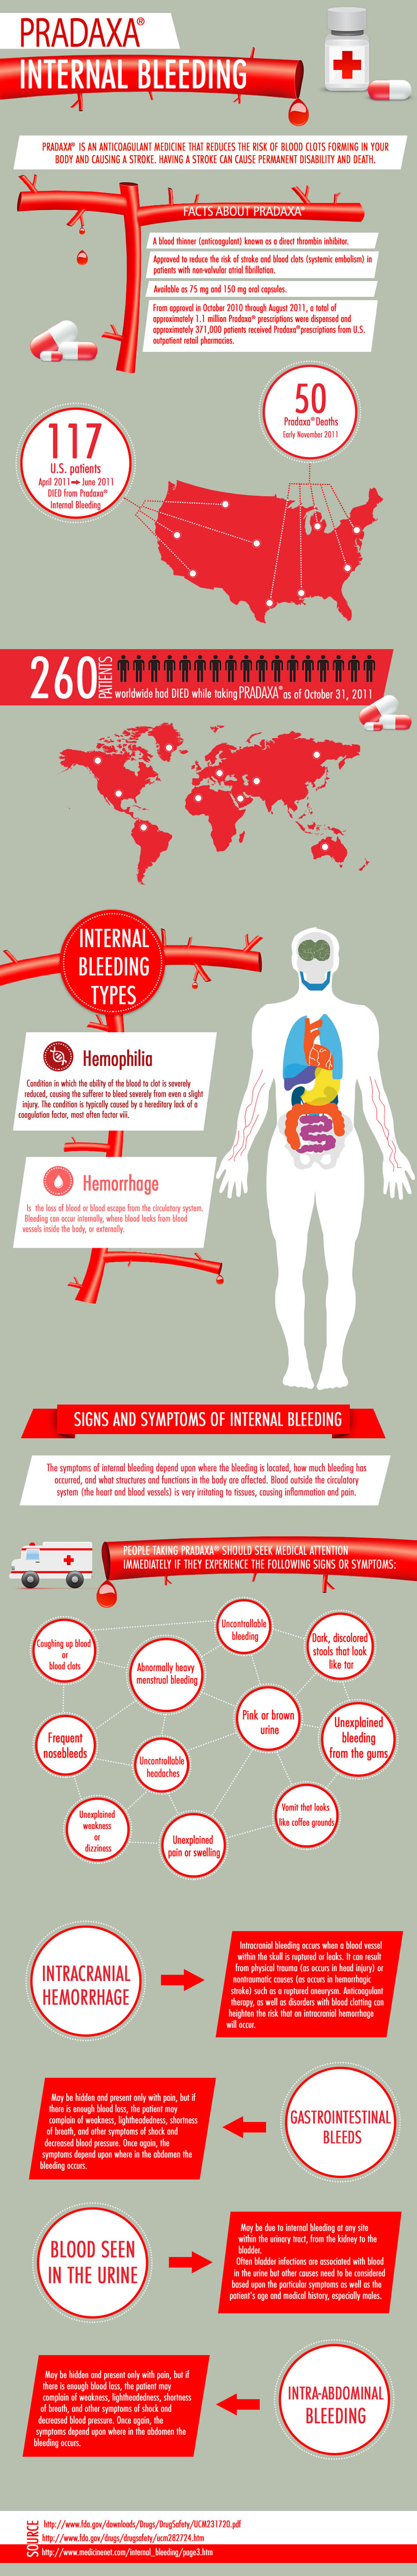 Pradaxa-Internal-Bleeding-infographic